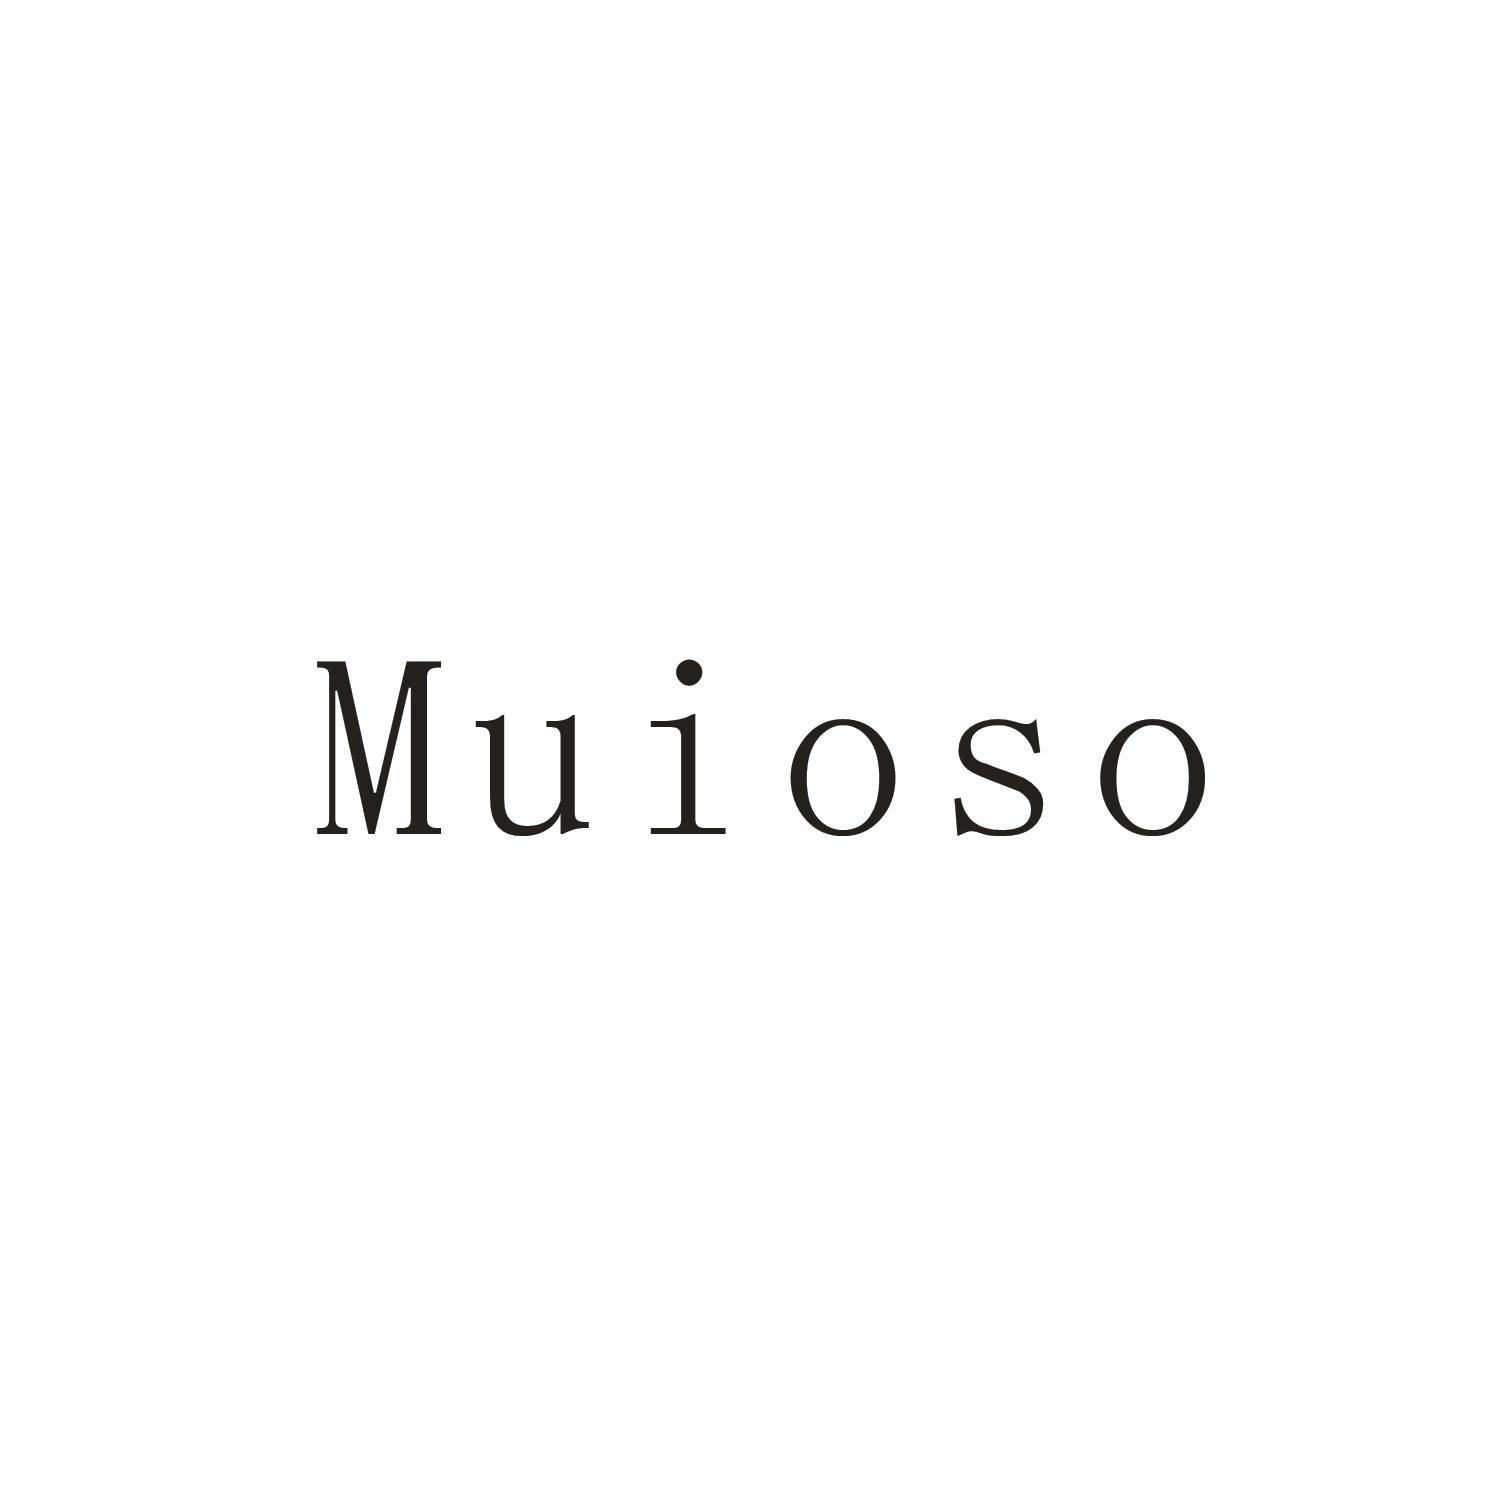 MUIOSO首饰包商标转让费用买卖交易流程